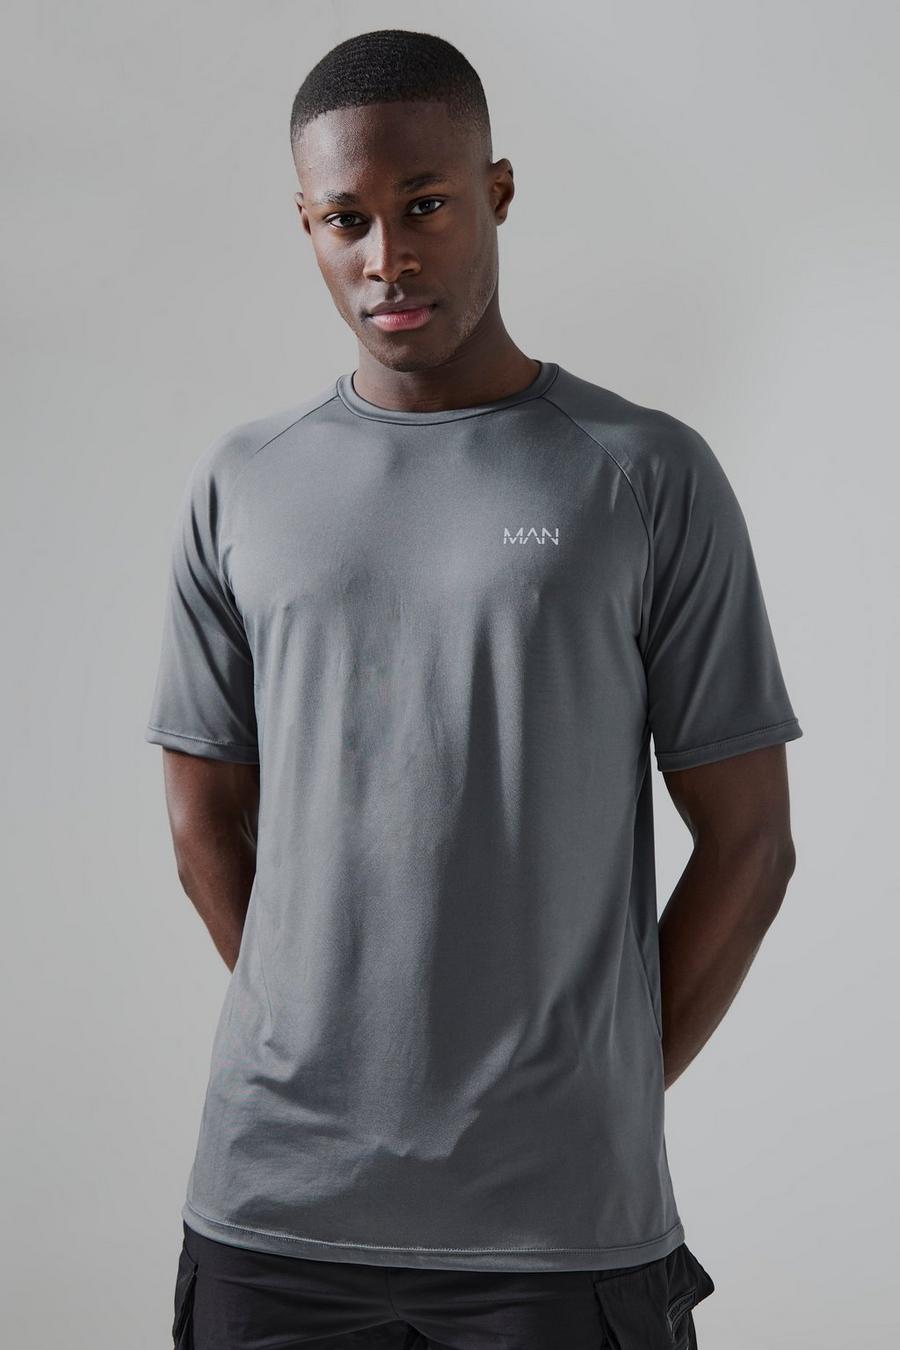 Man Active Raglan T-Shirt, Charcoal